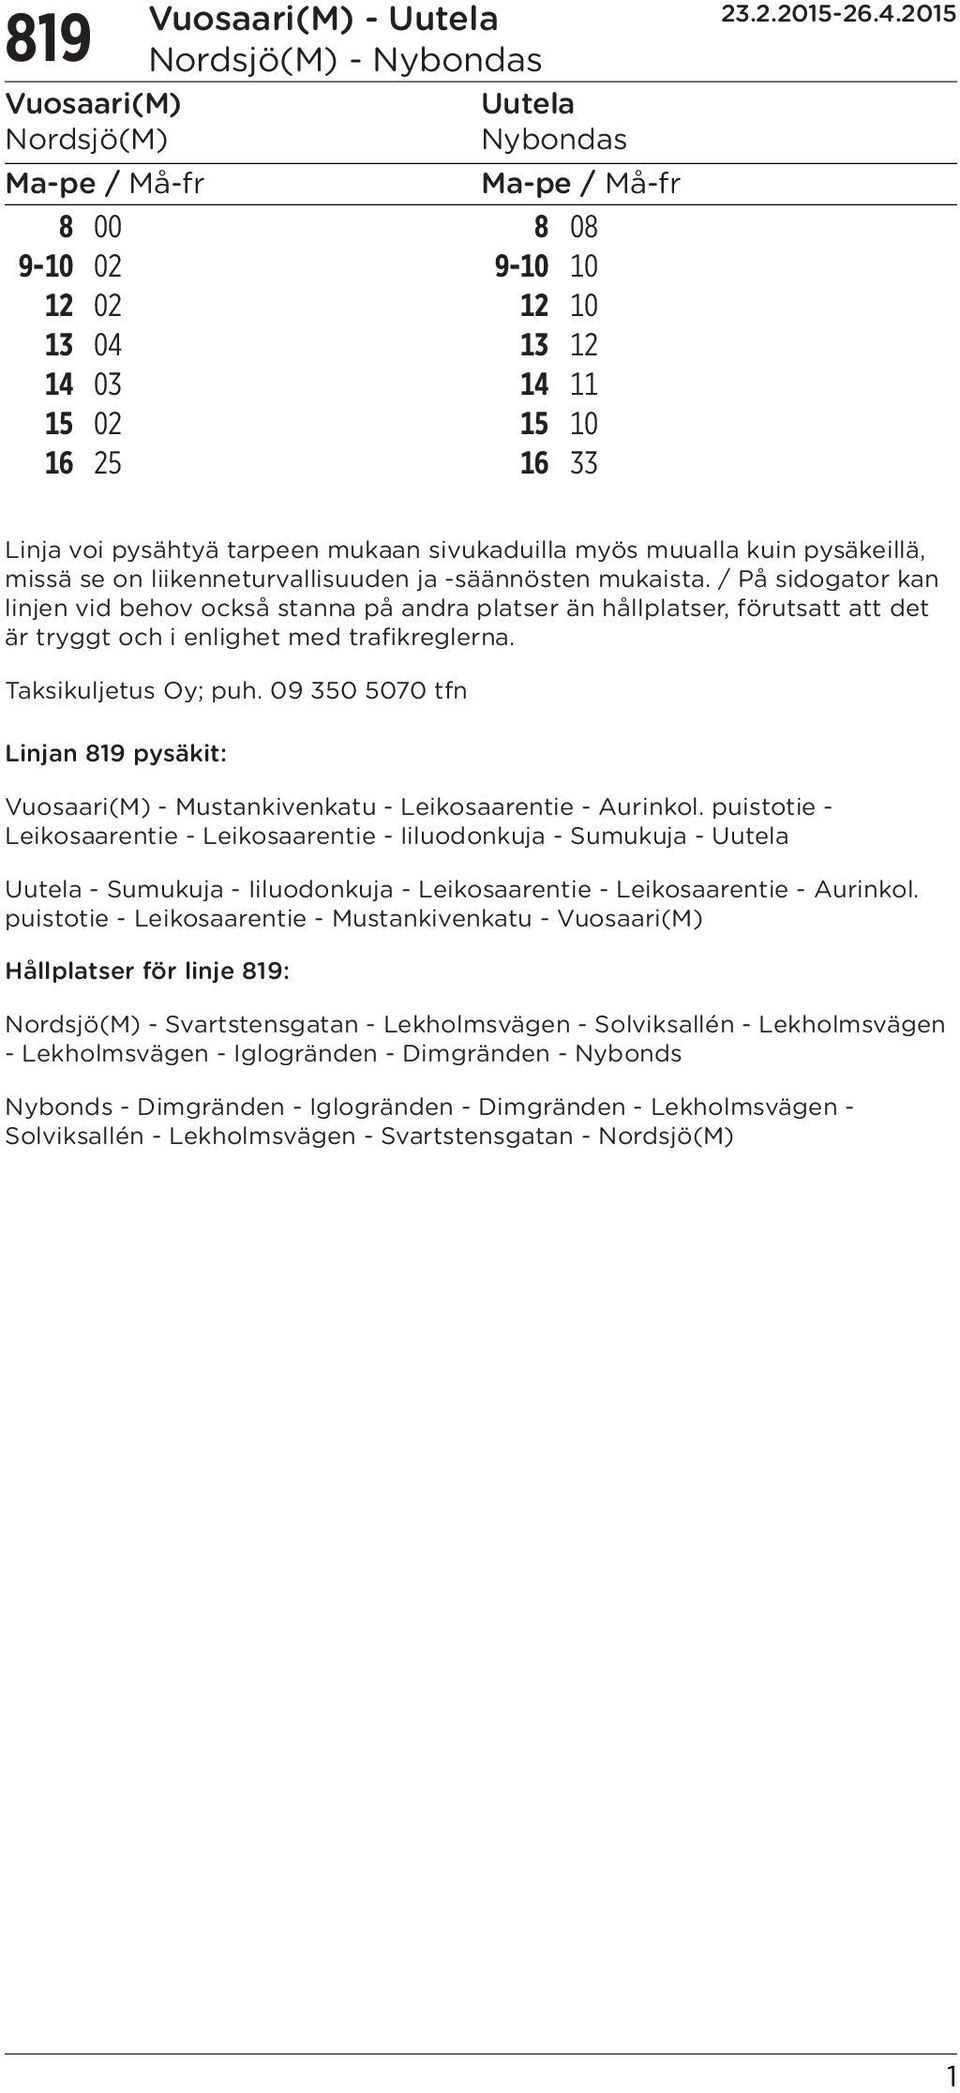 puistotie - Leikosaarentie - Mustankivenkatu - Hållplatser för linje 819: - Svartstensgatan - Lekholmsvägen - Solviksallén - Lekholmsvägen - Lekholmsvägen - Iglogränden